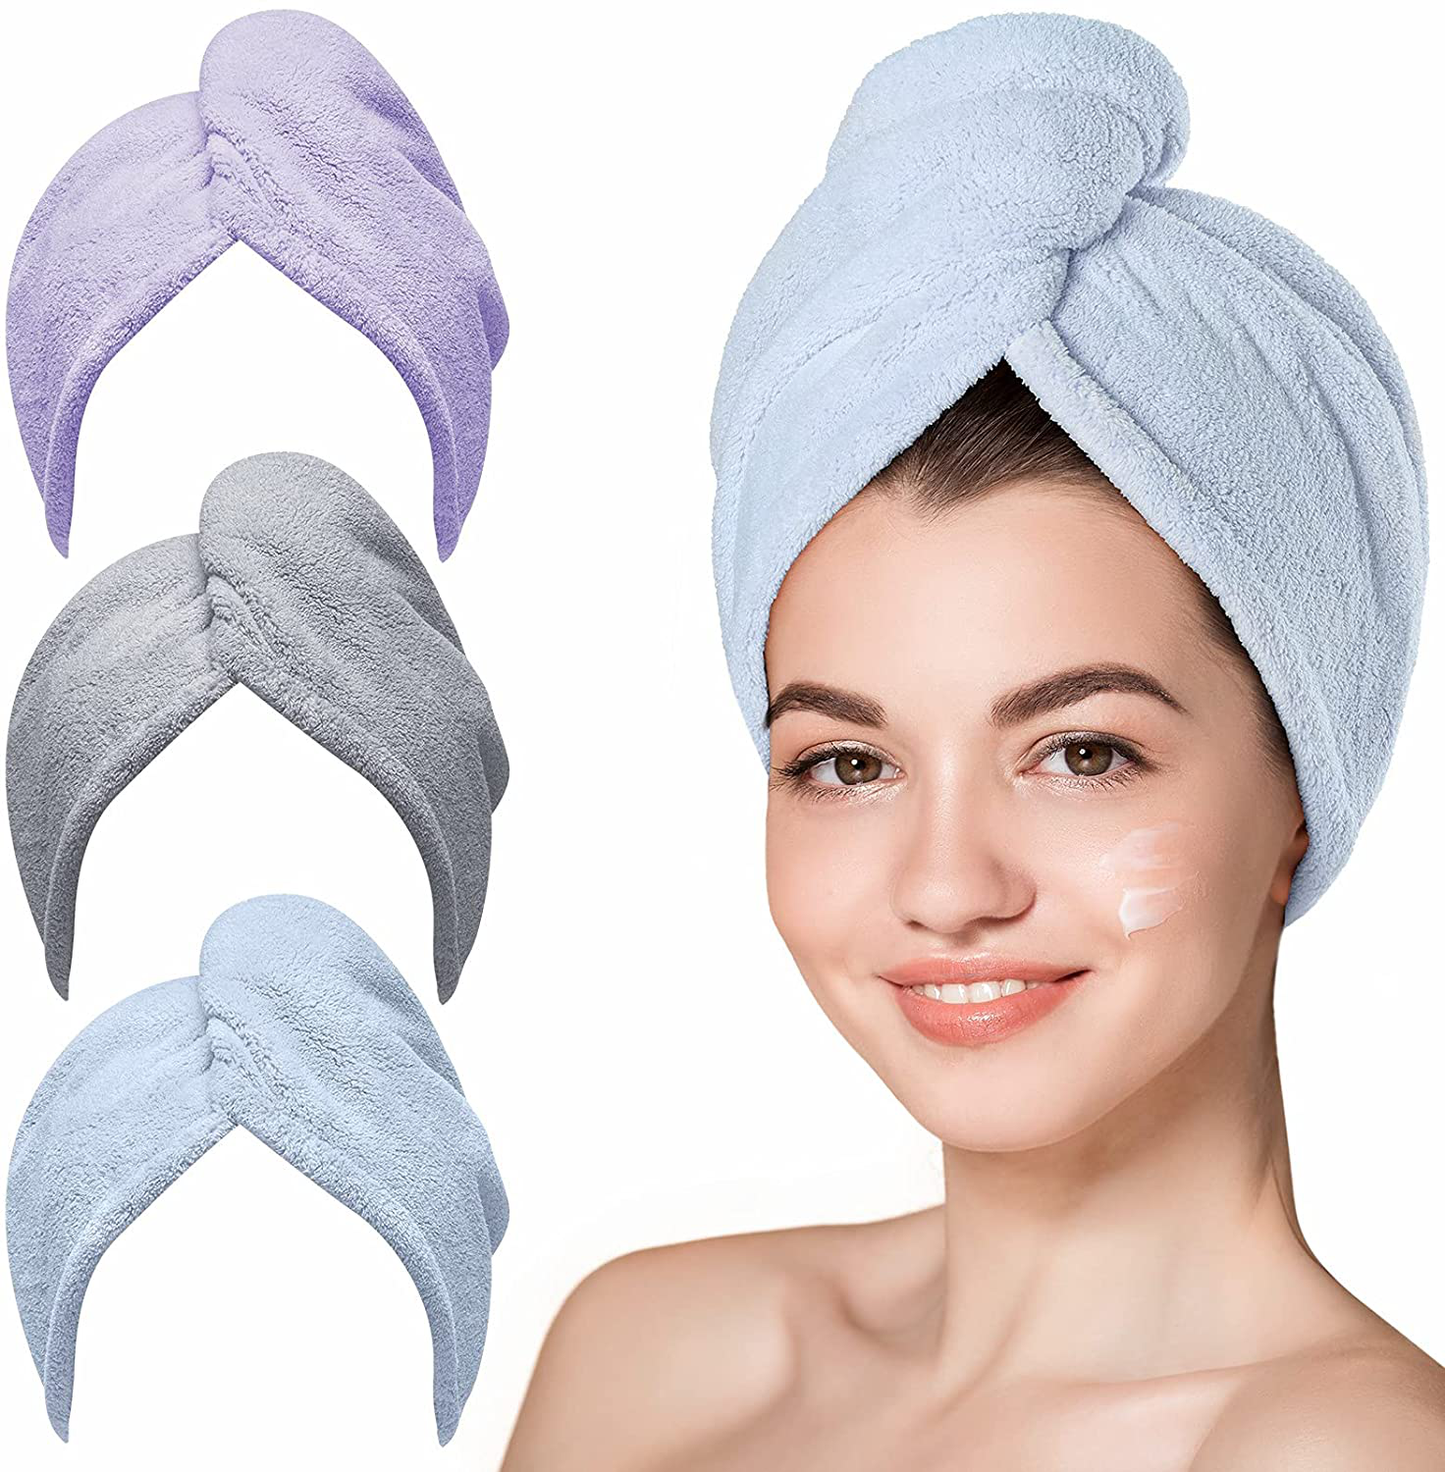 Microfiber Hair Towel, Hicober 3 Packs Hair Turbans for Wet Hair, Drying Hair Wrap Towels for Curly Hair Women Anti Frizz